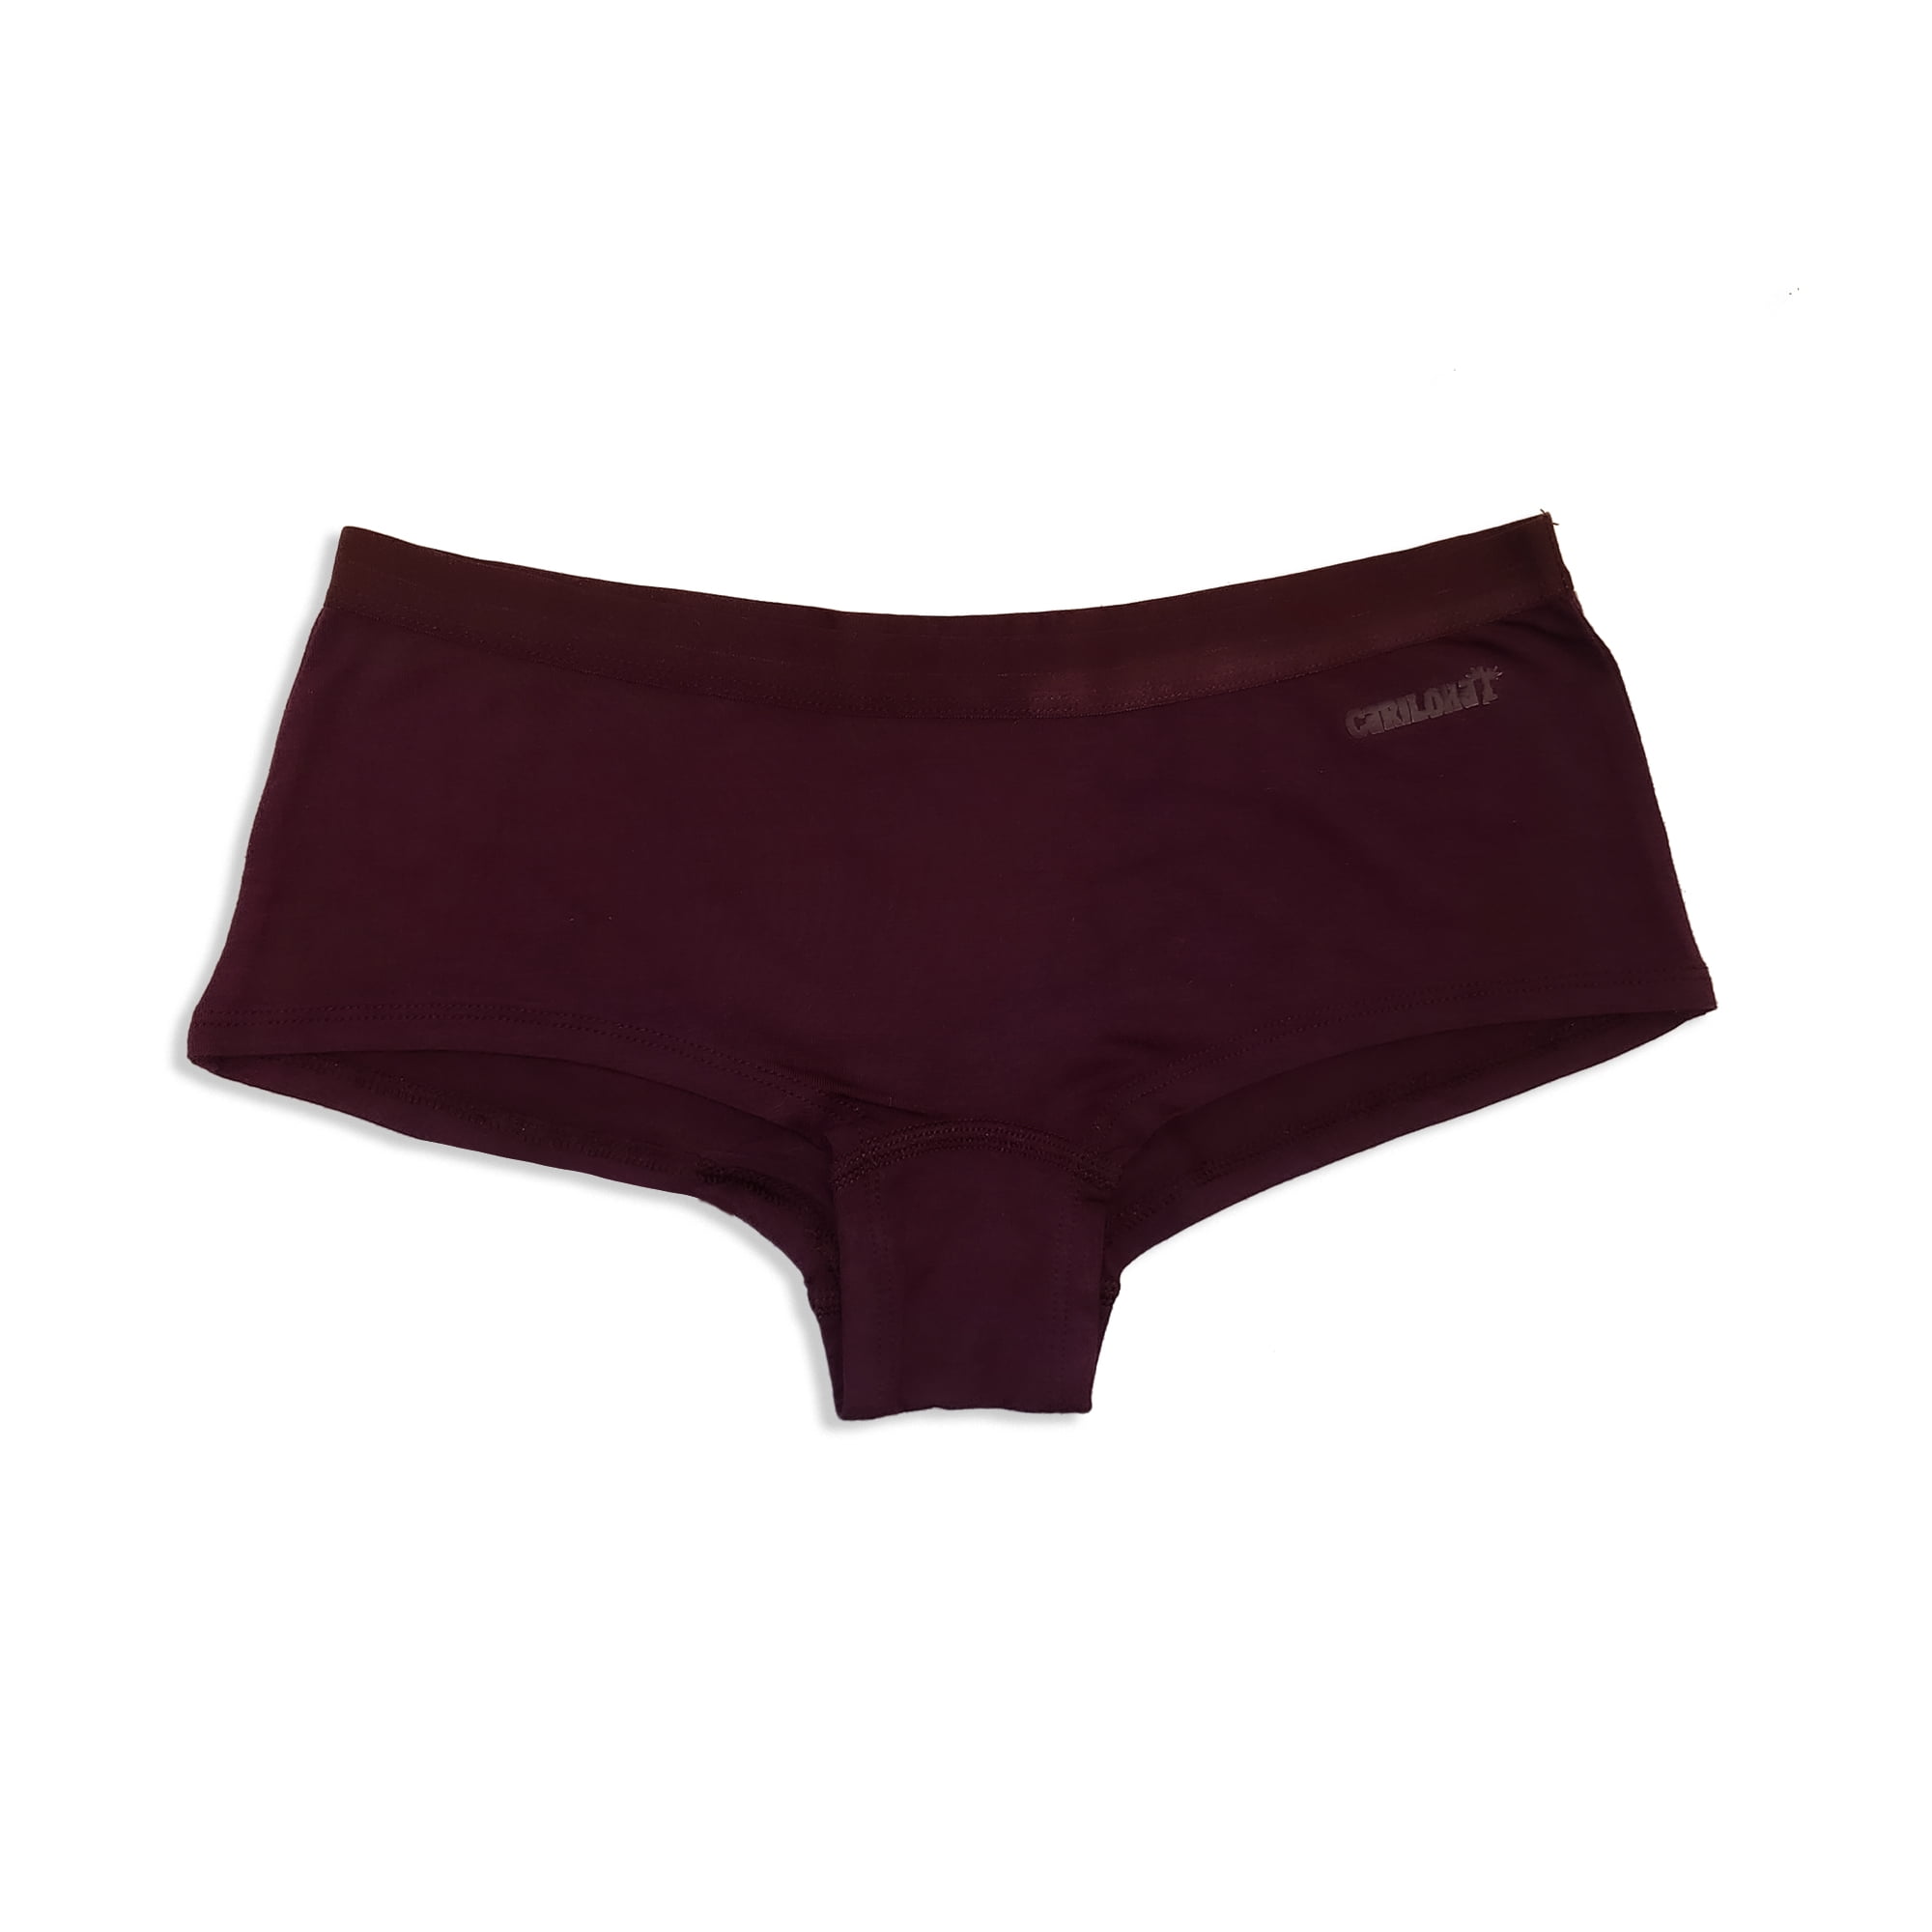 Cariloha Bamboo Boyshort Briefs - Merlot Underwear 1 Pc 